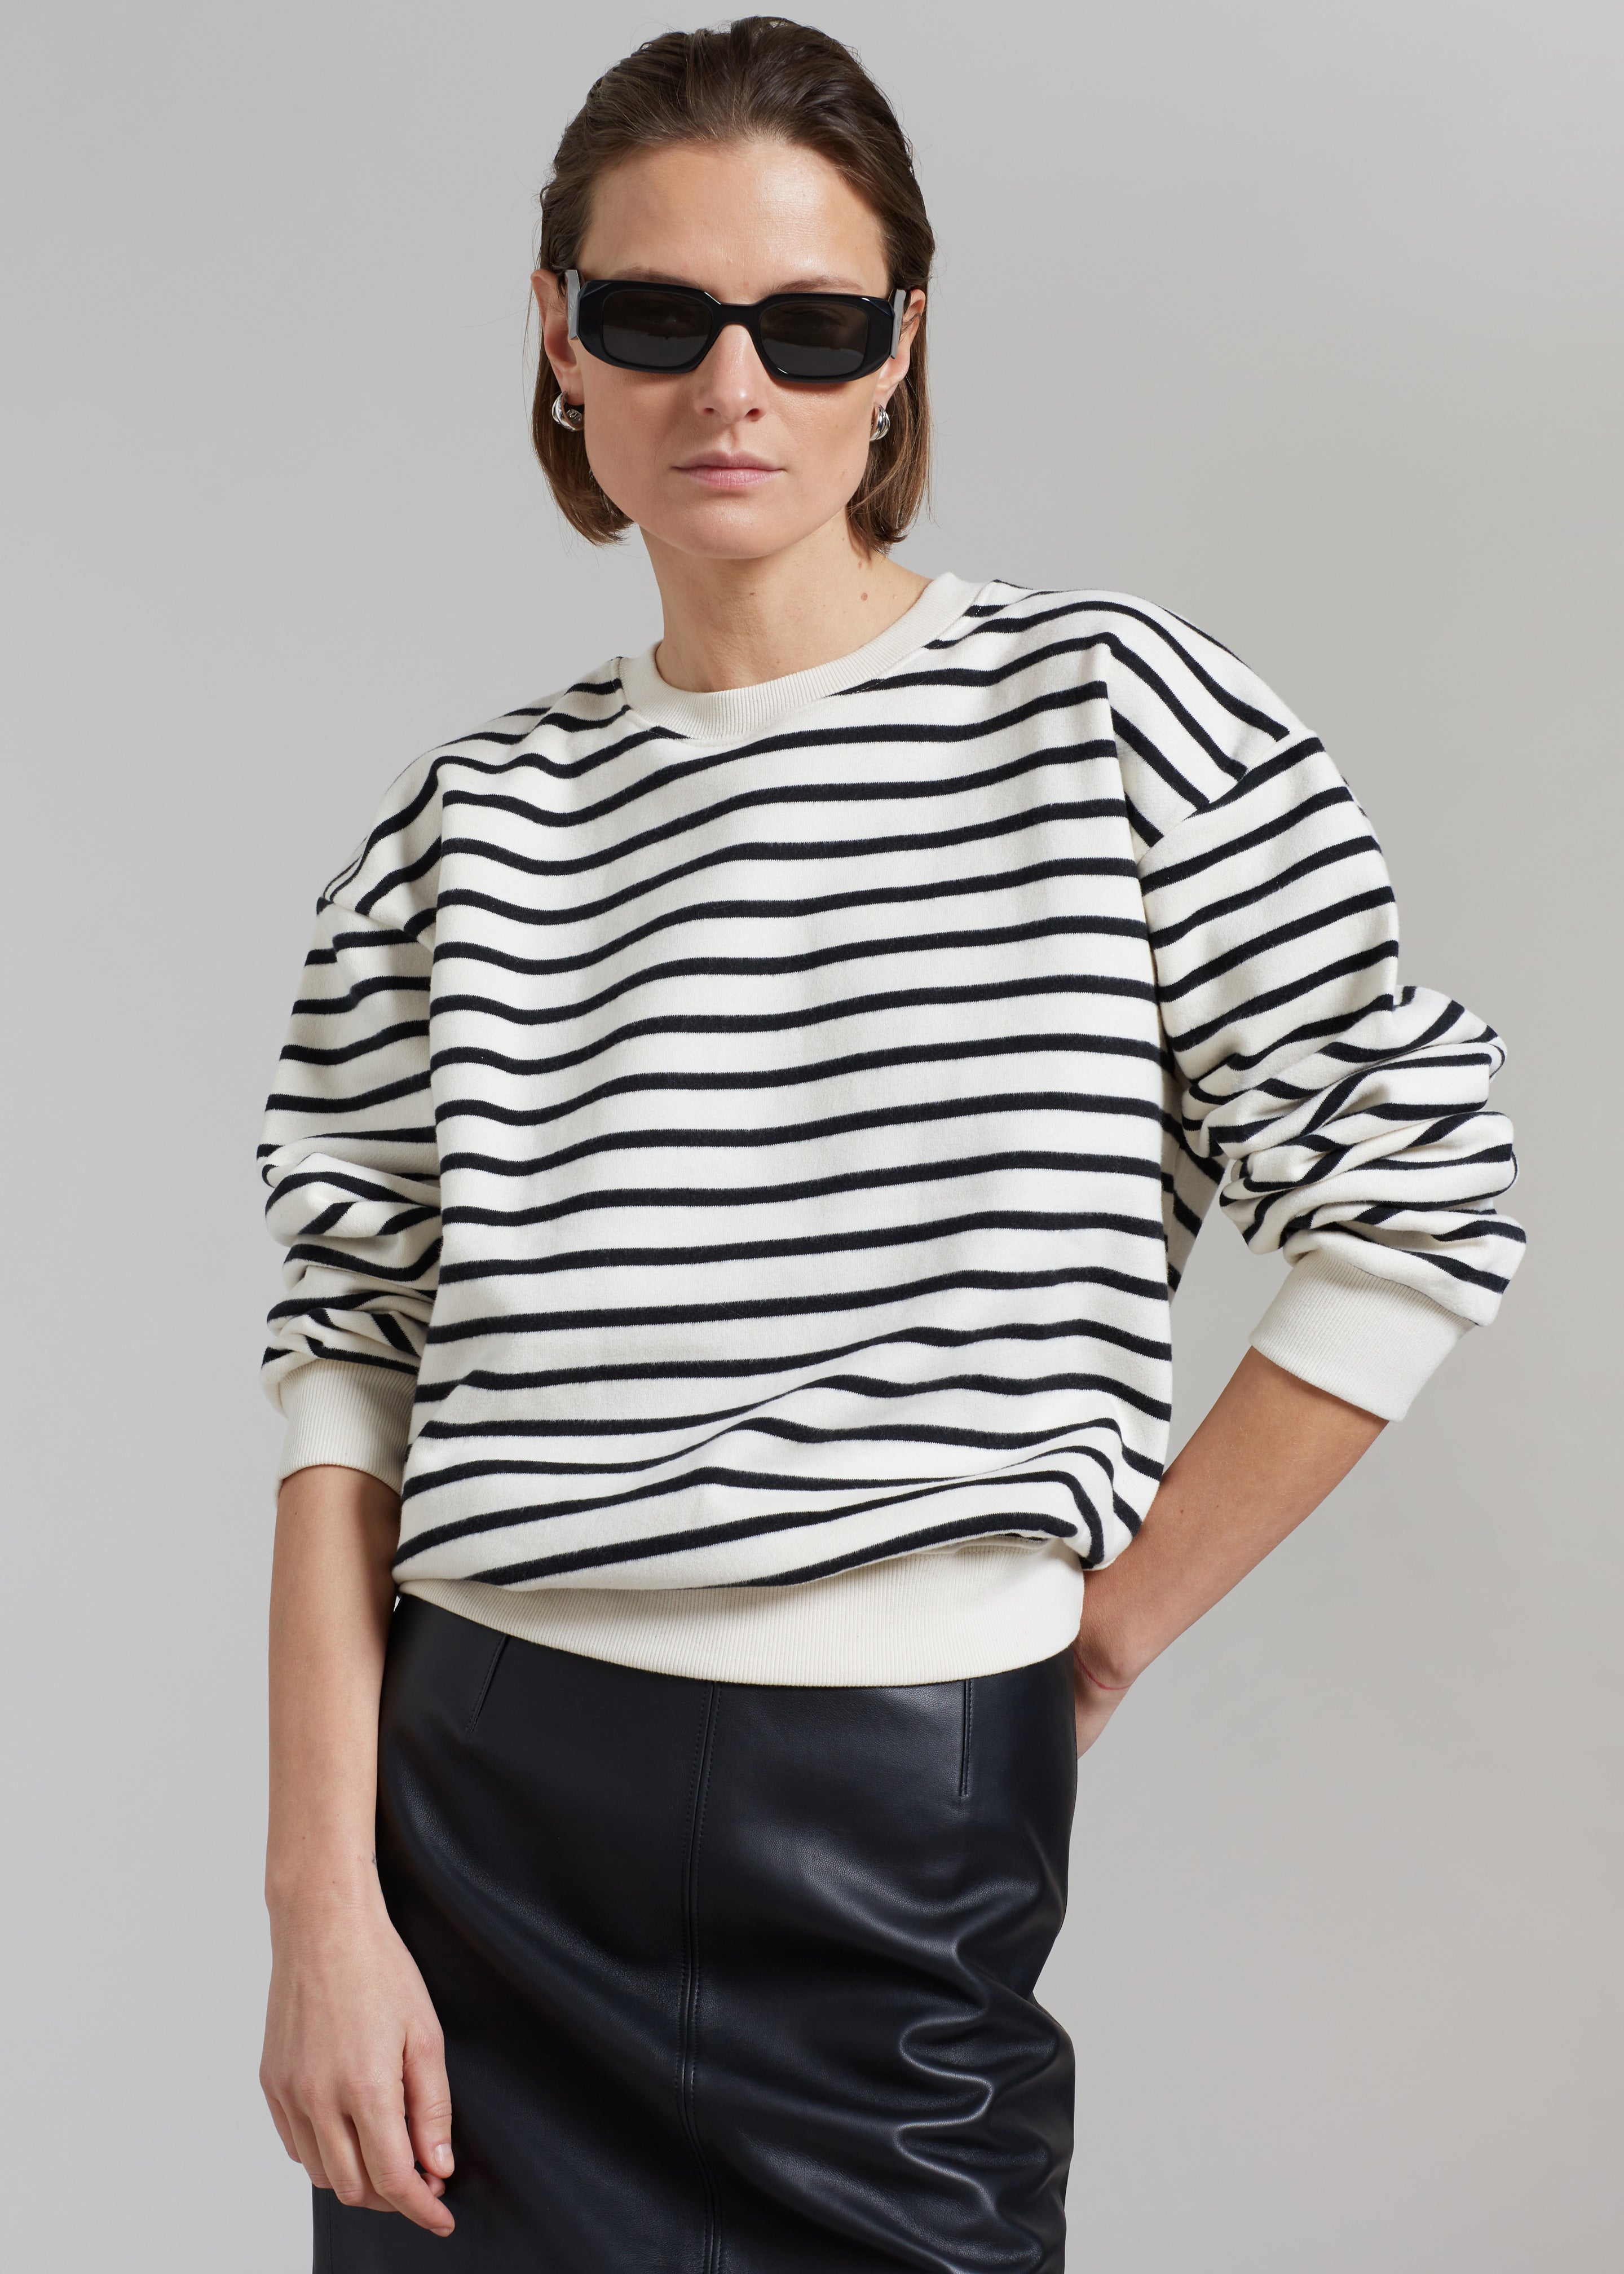 Saint Stripe Sweater - Black/White Stripe - 4